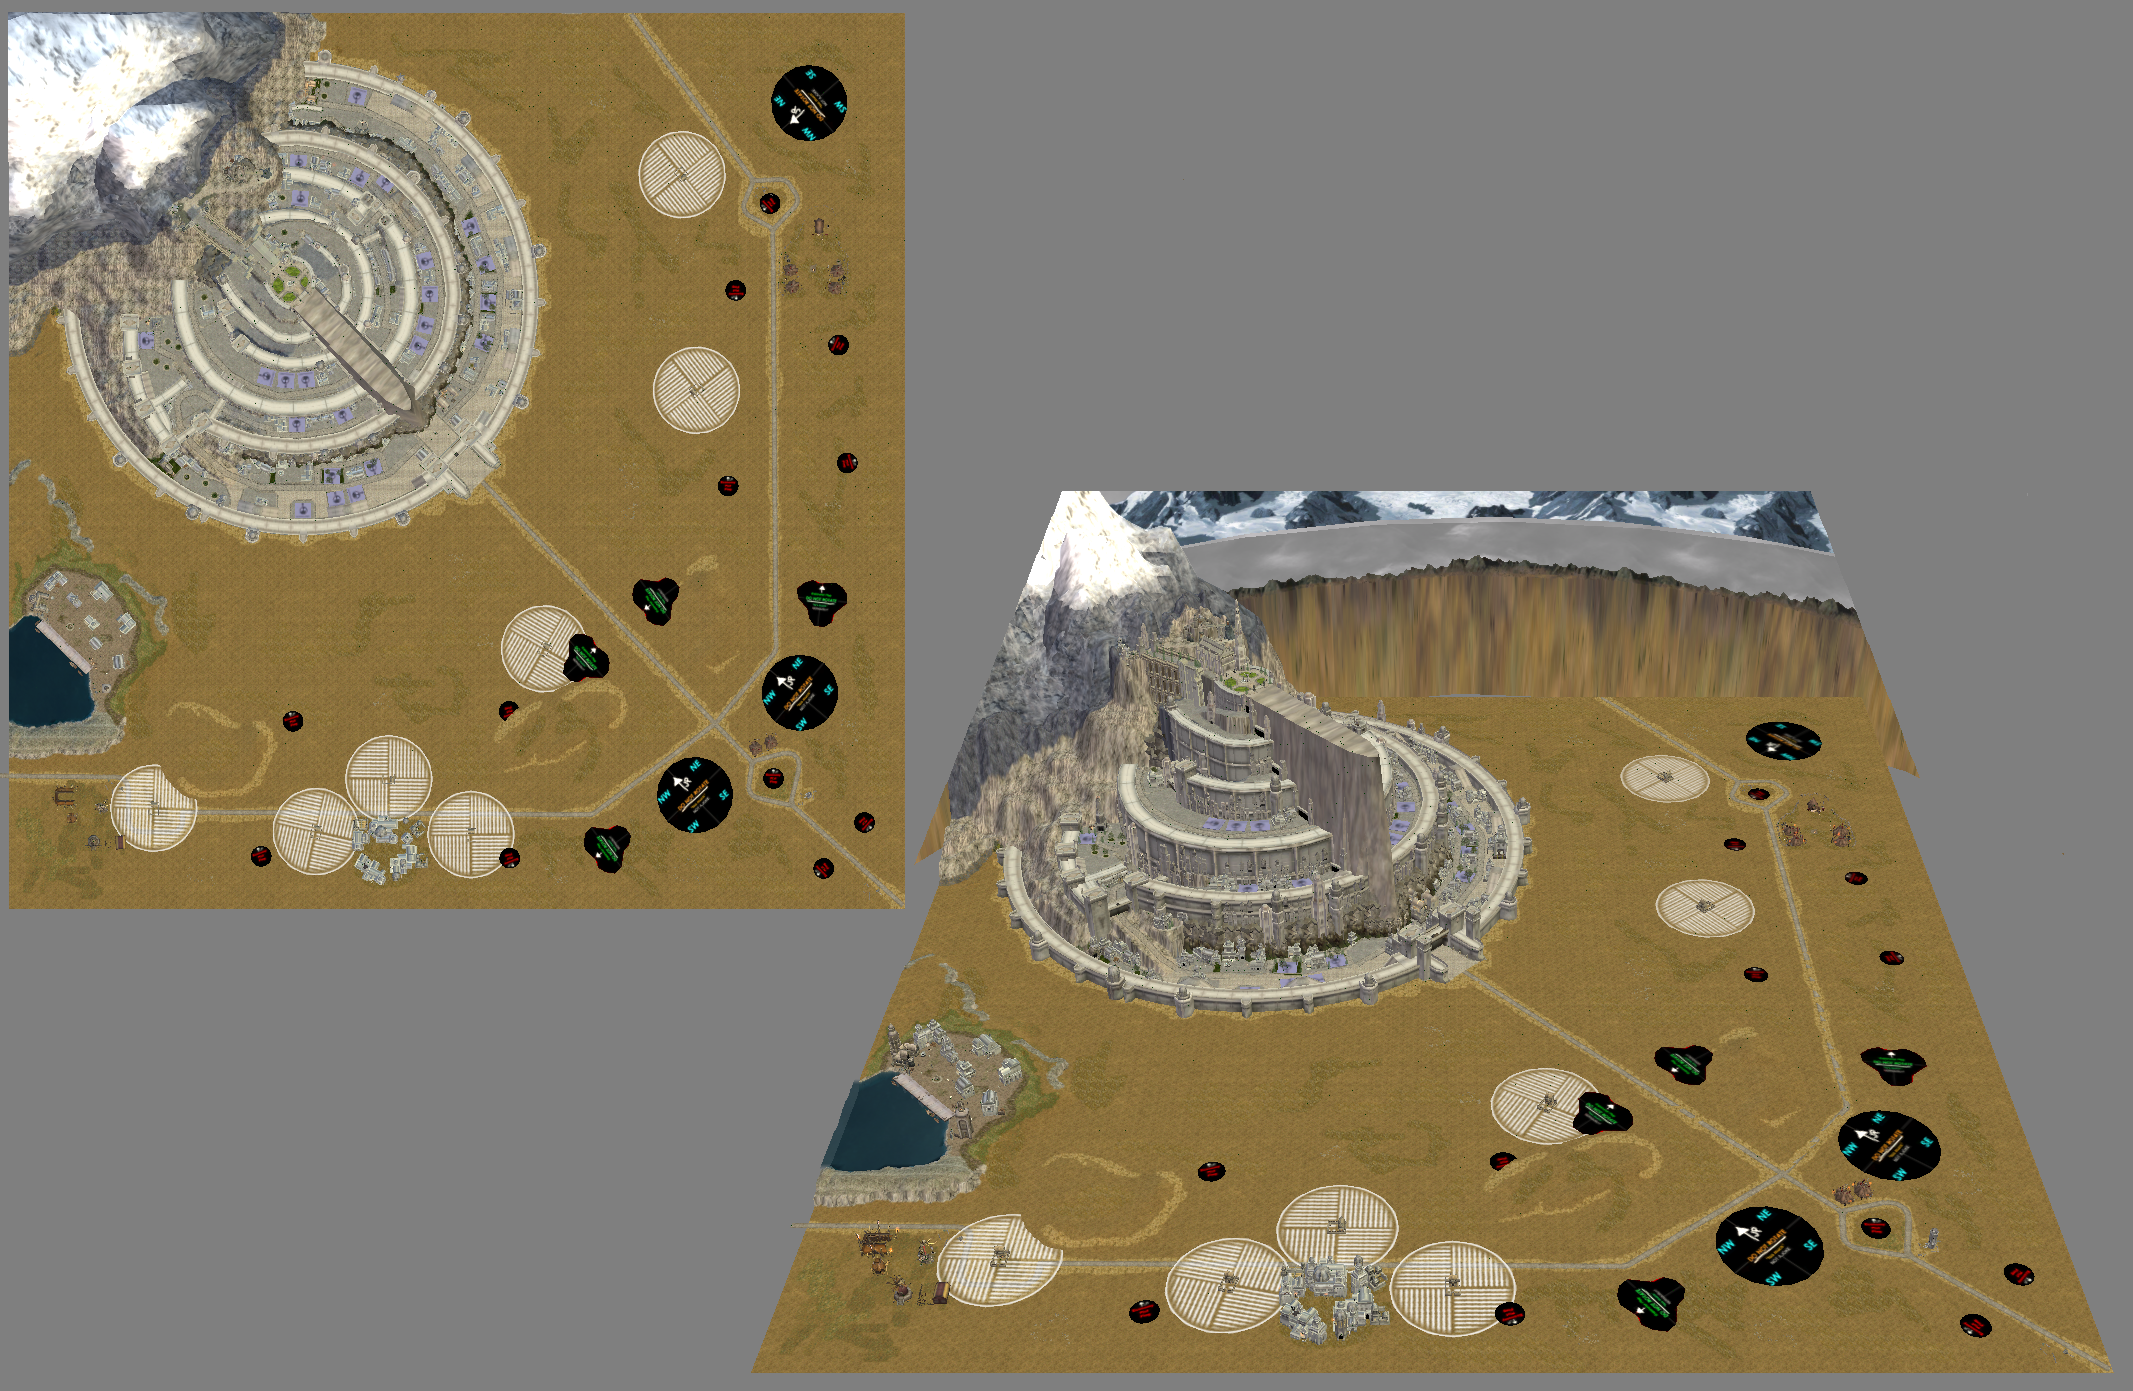 Minas Tirith The White City v2.0 (Edain) addon - Battle for Middle